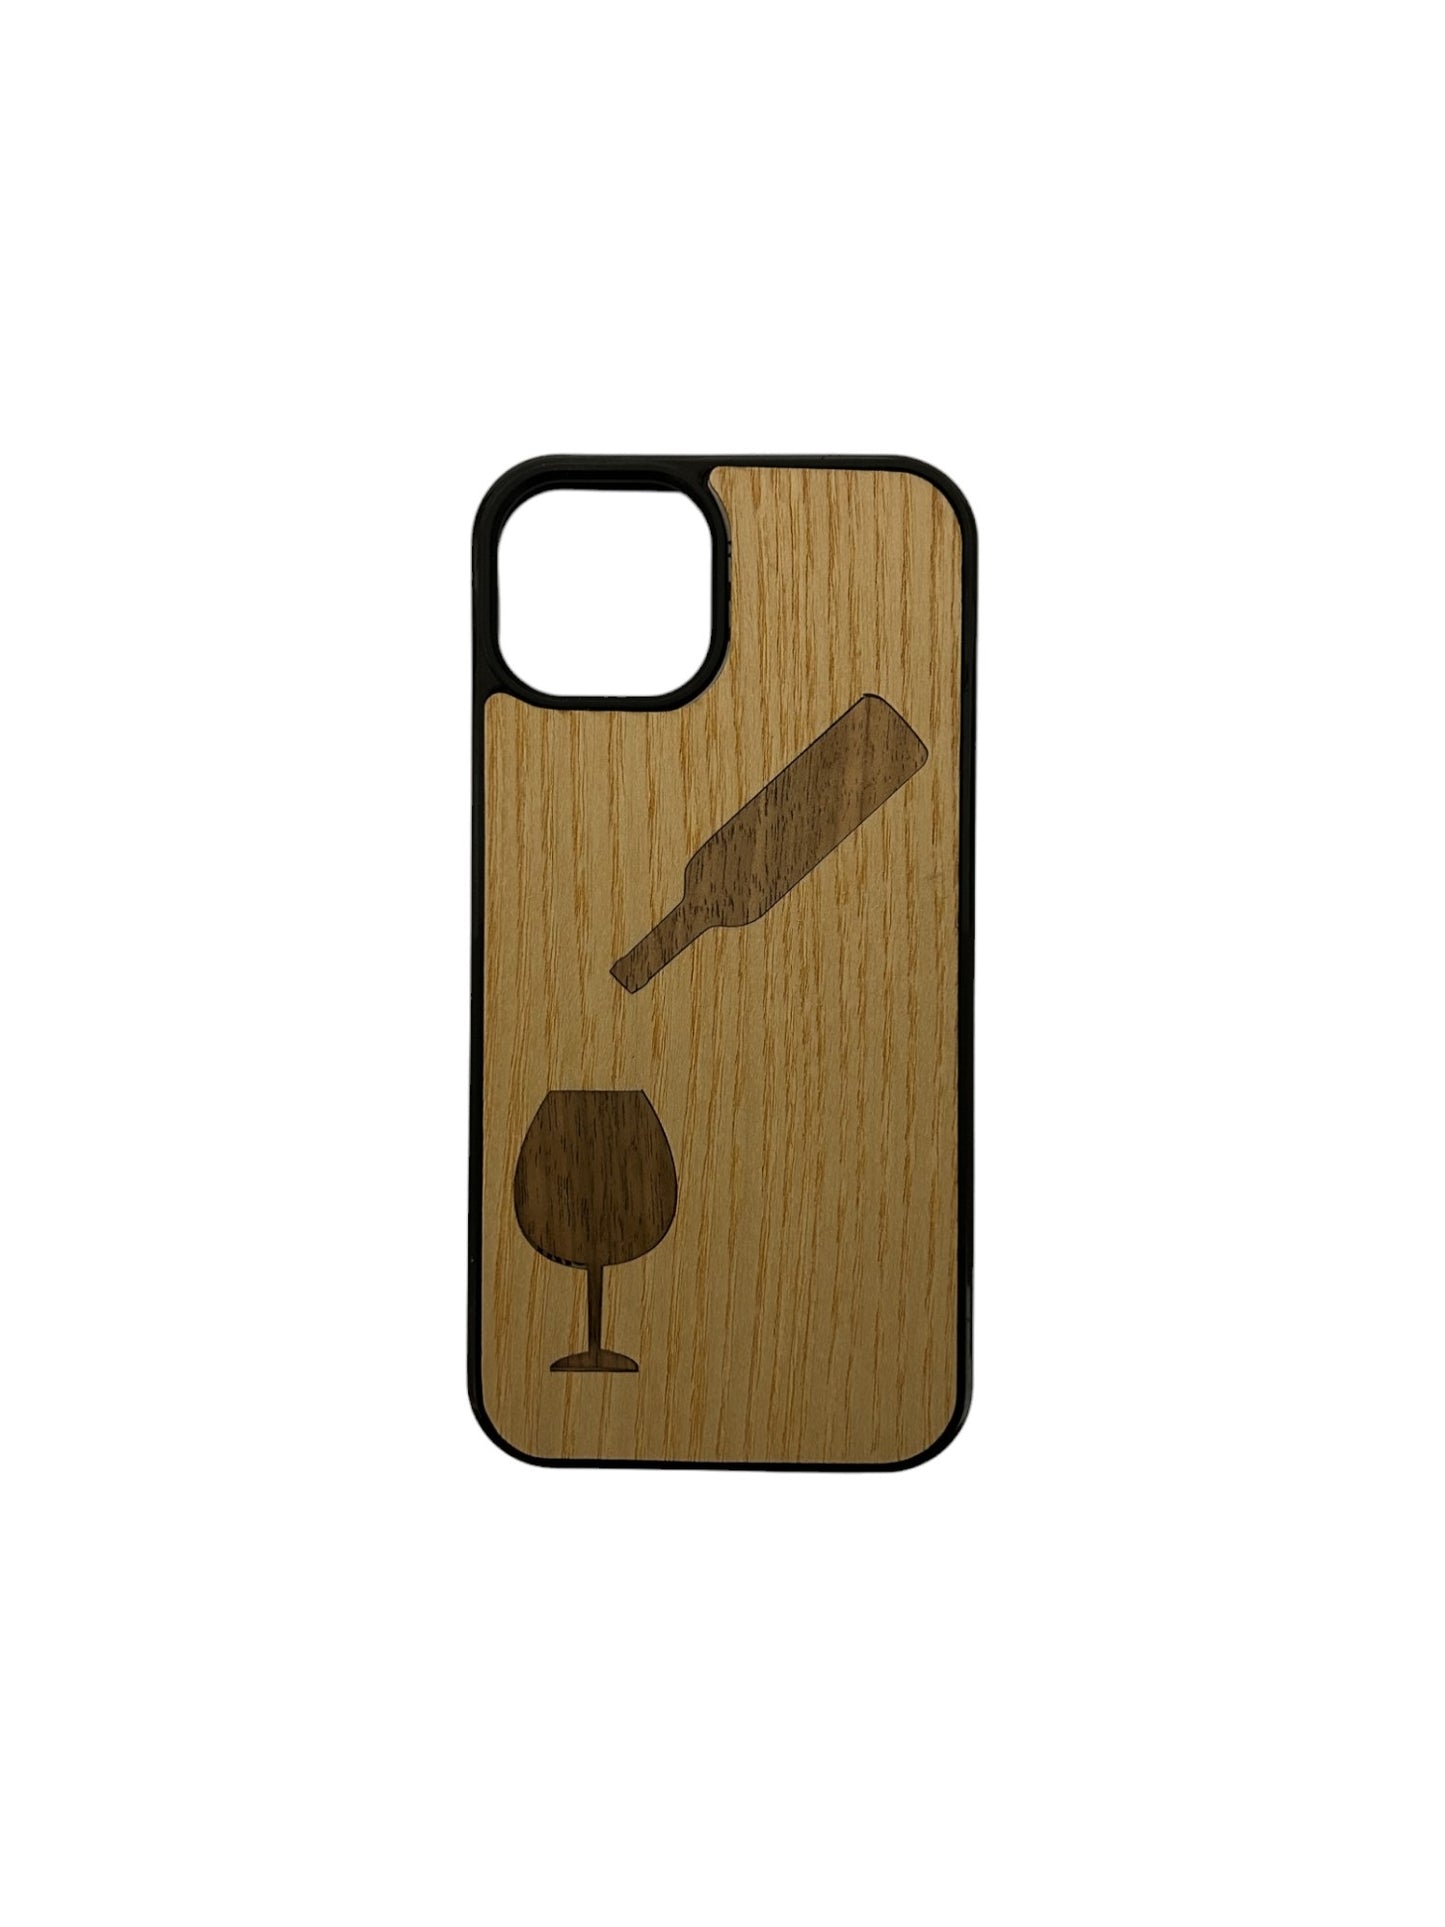 Iphone case - Wine